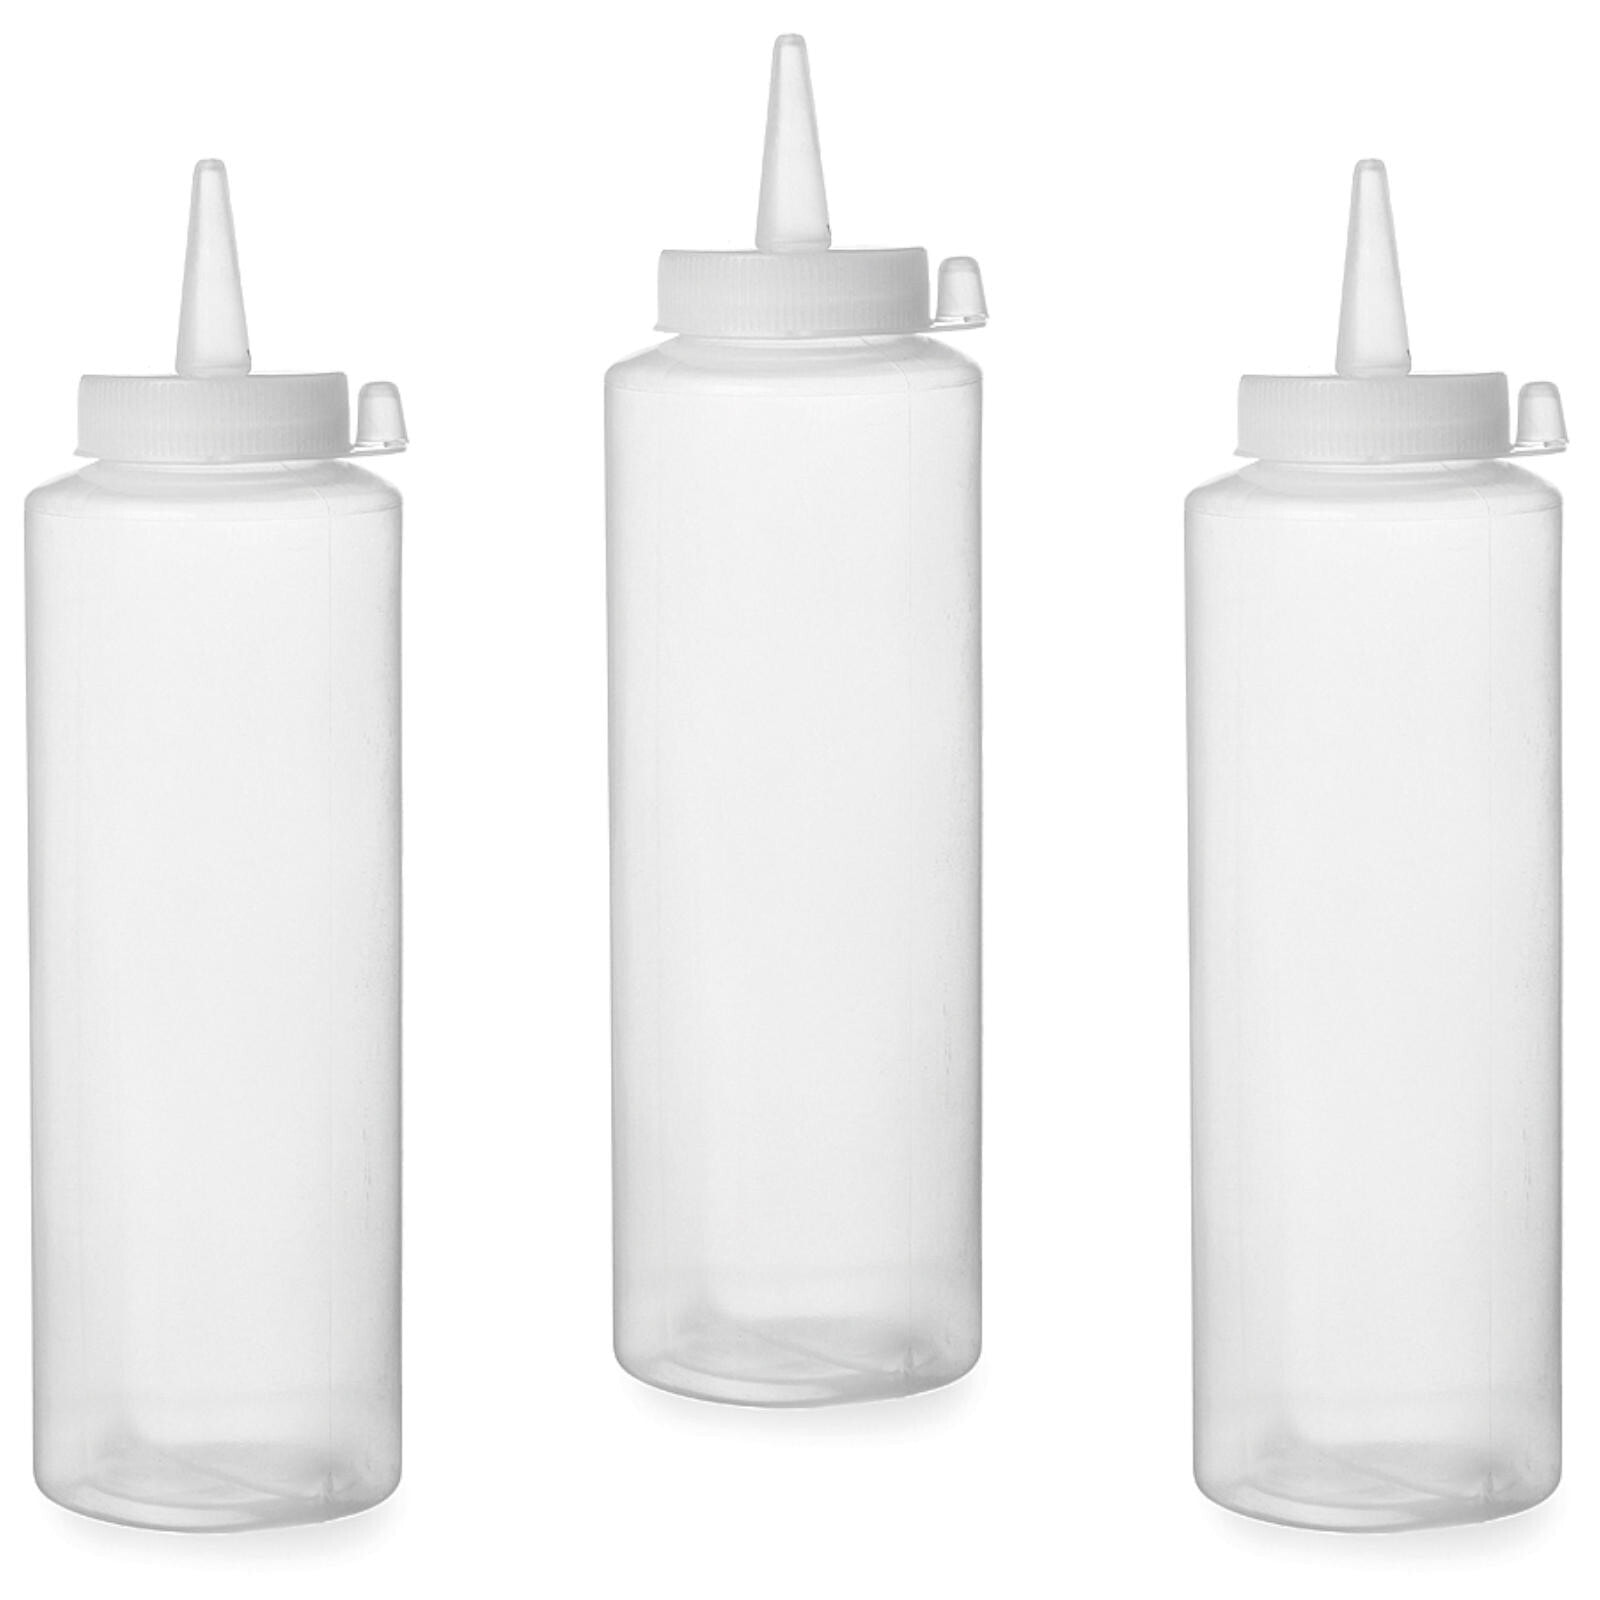 Cold sauce dispenser, set of 3 - transparent 0.35L - HENDI 557853